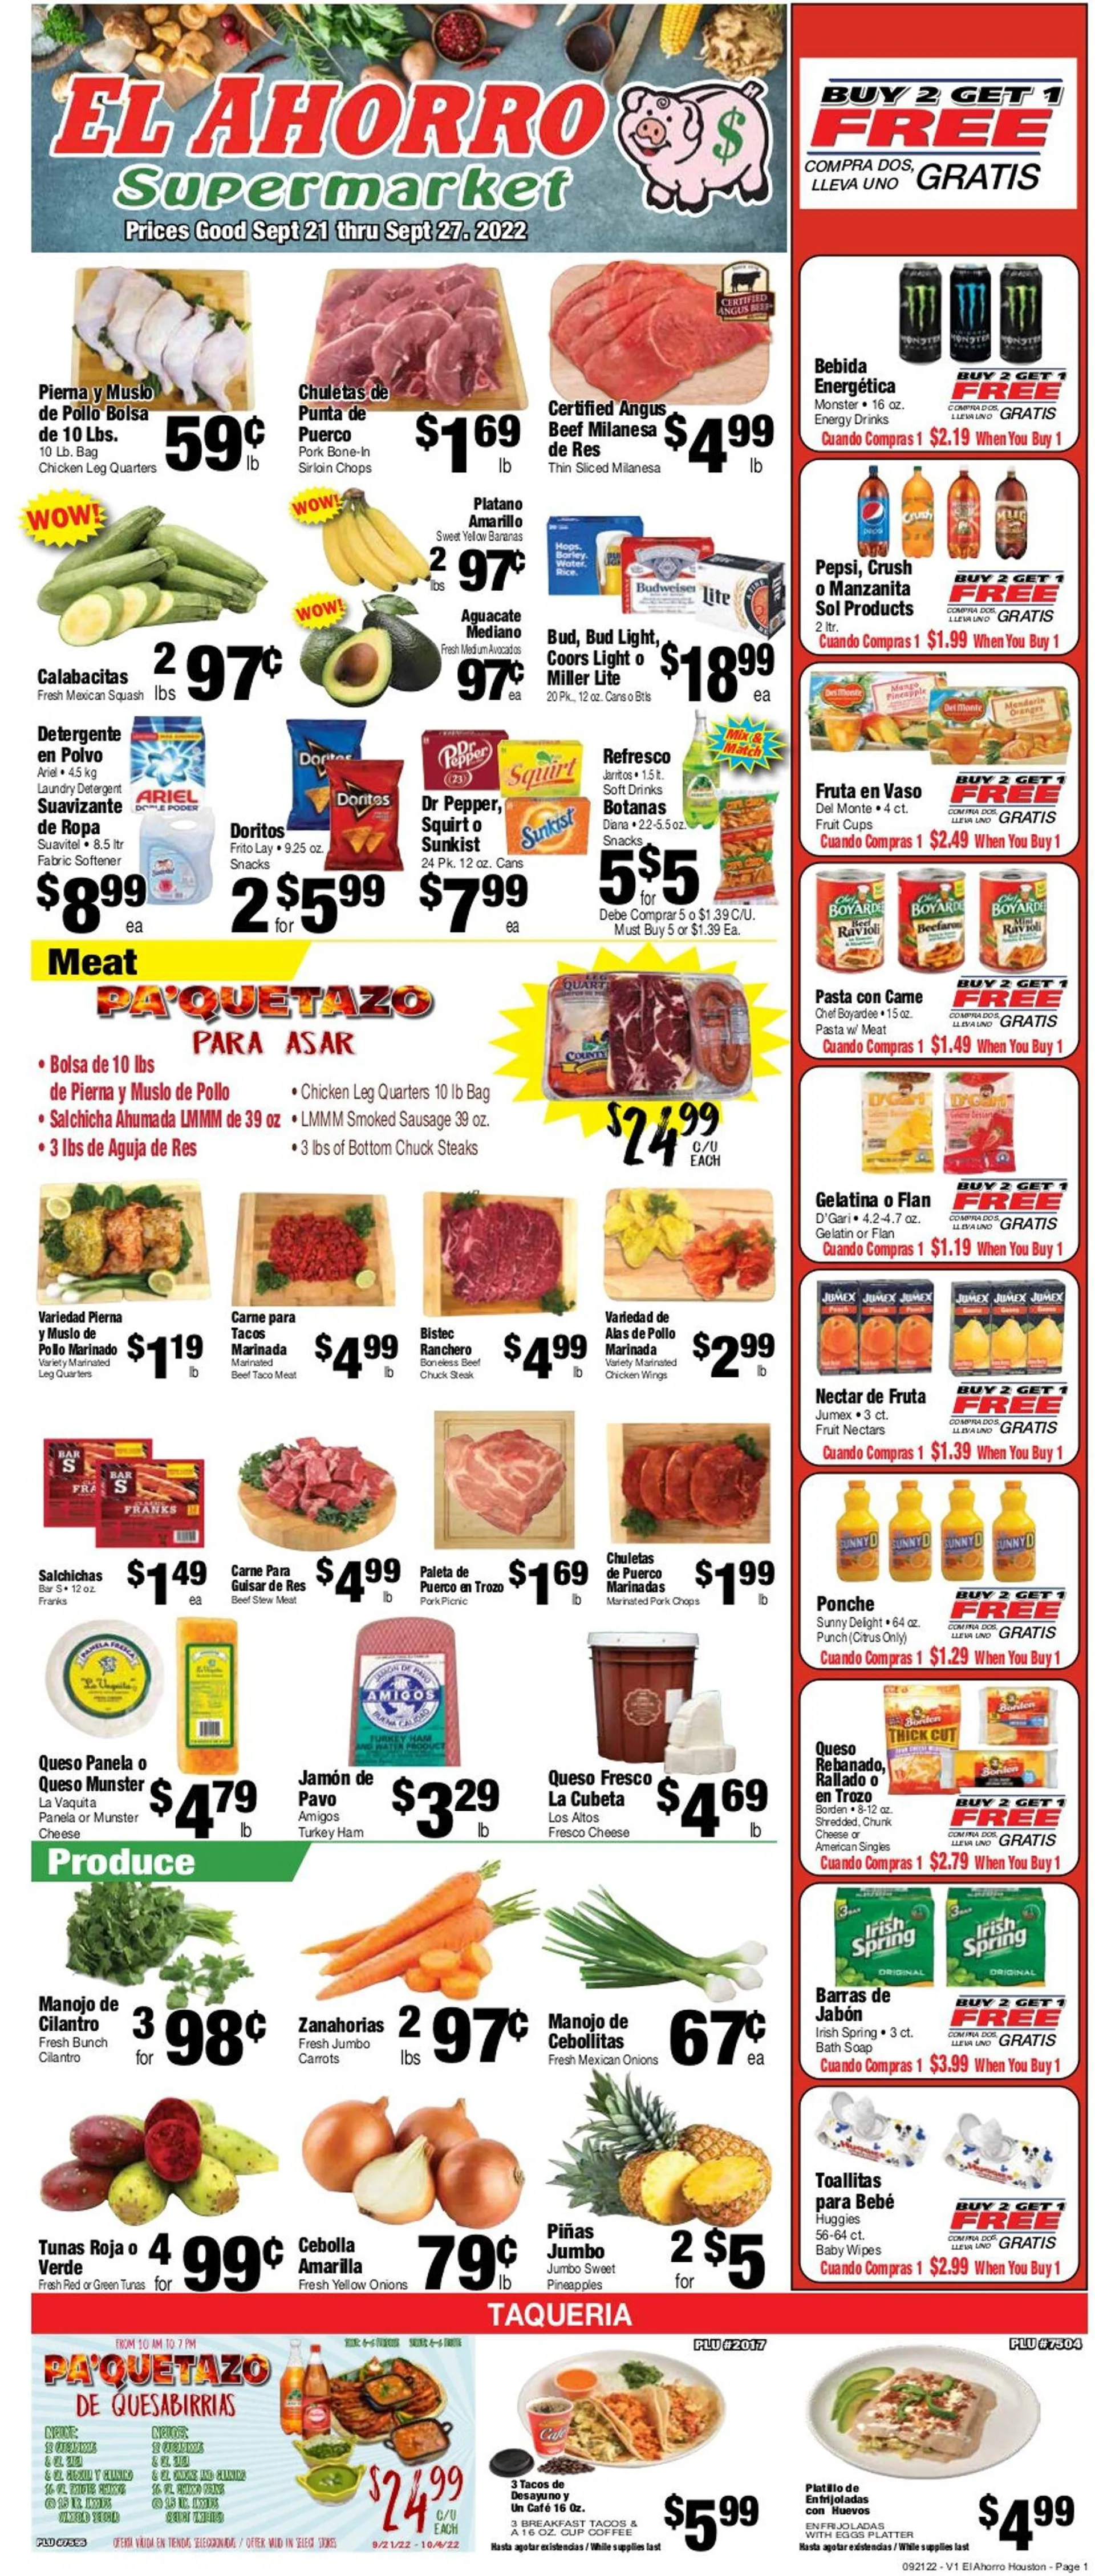 El Ahorro Supermarket Current weekly ad - 1